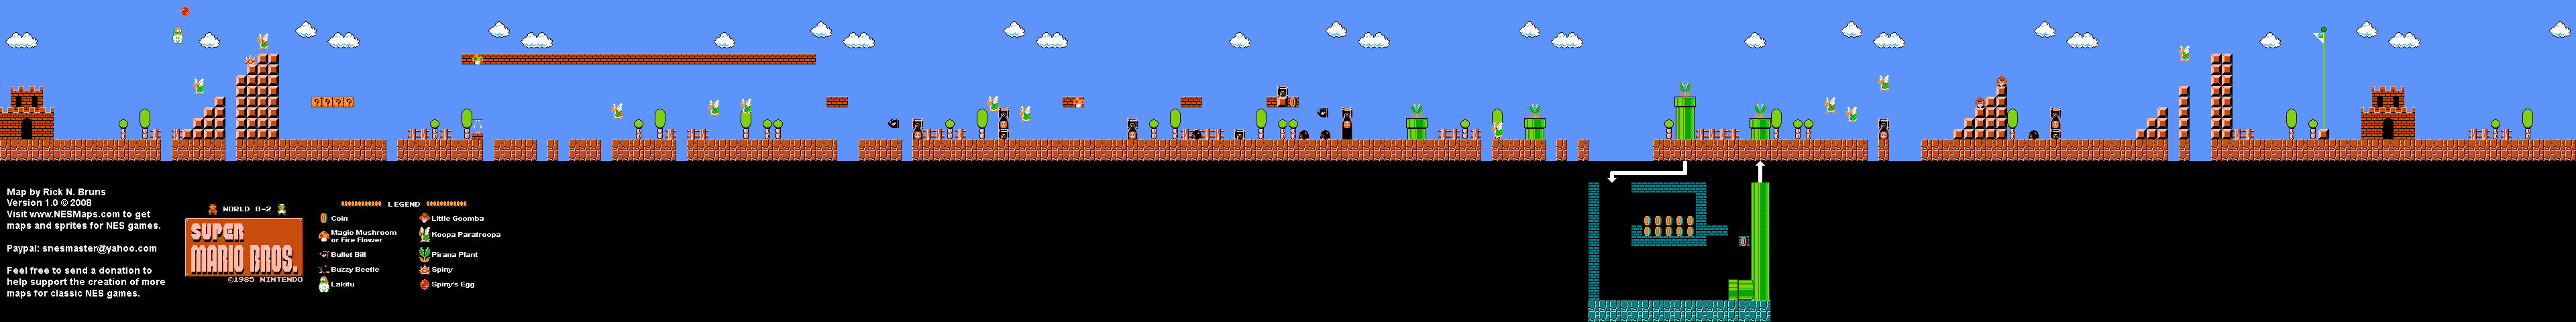 Super Mario Brothers - World 8-2 Nintendo NES Map